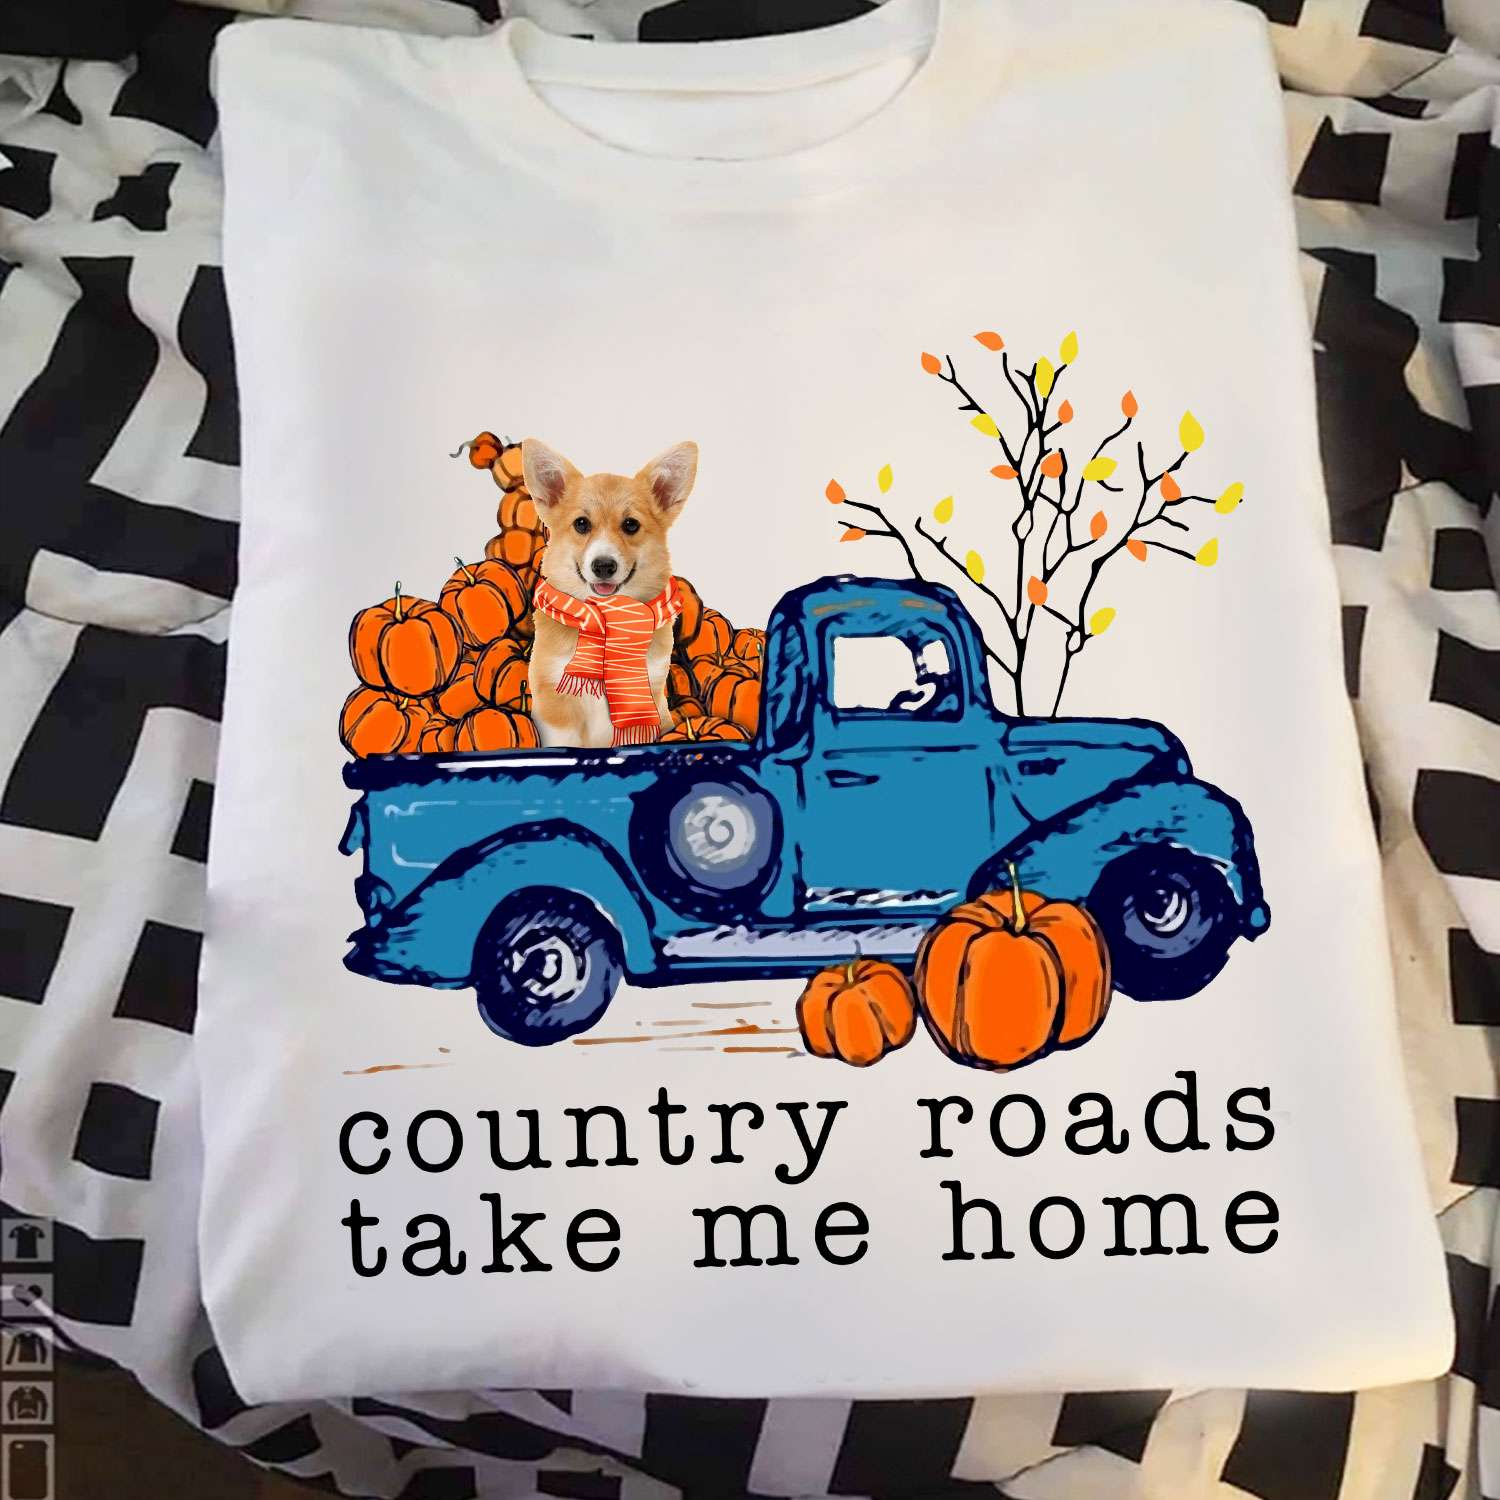 Country road take me home - Corgi dog on truck, fall the wonderful season